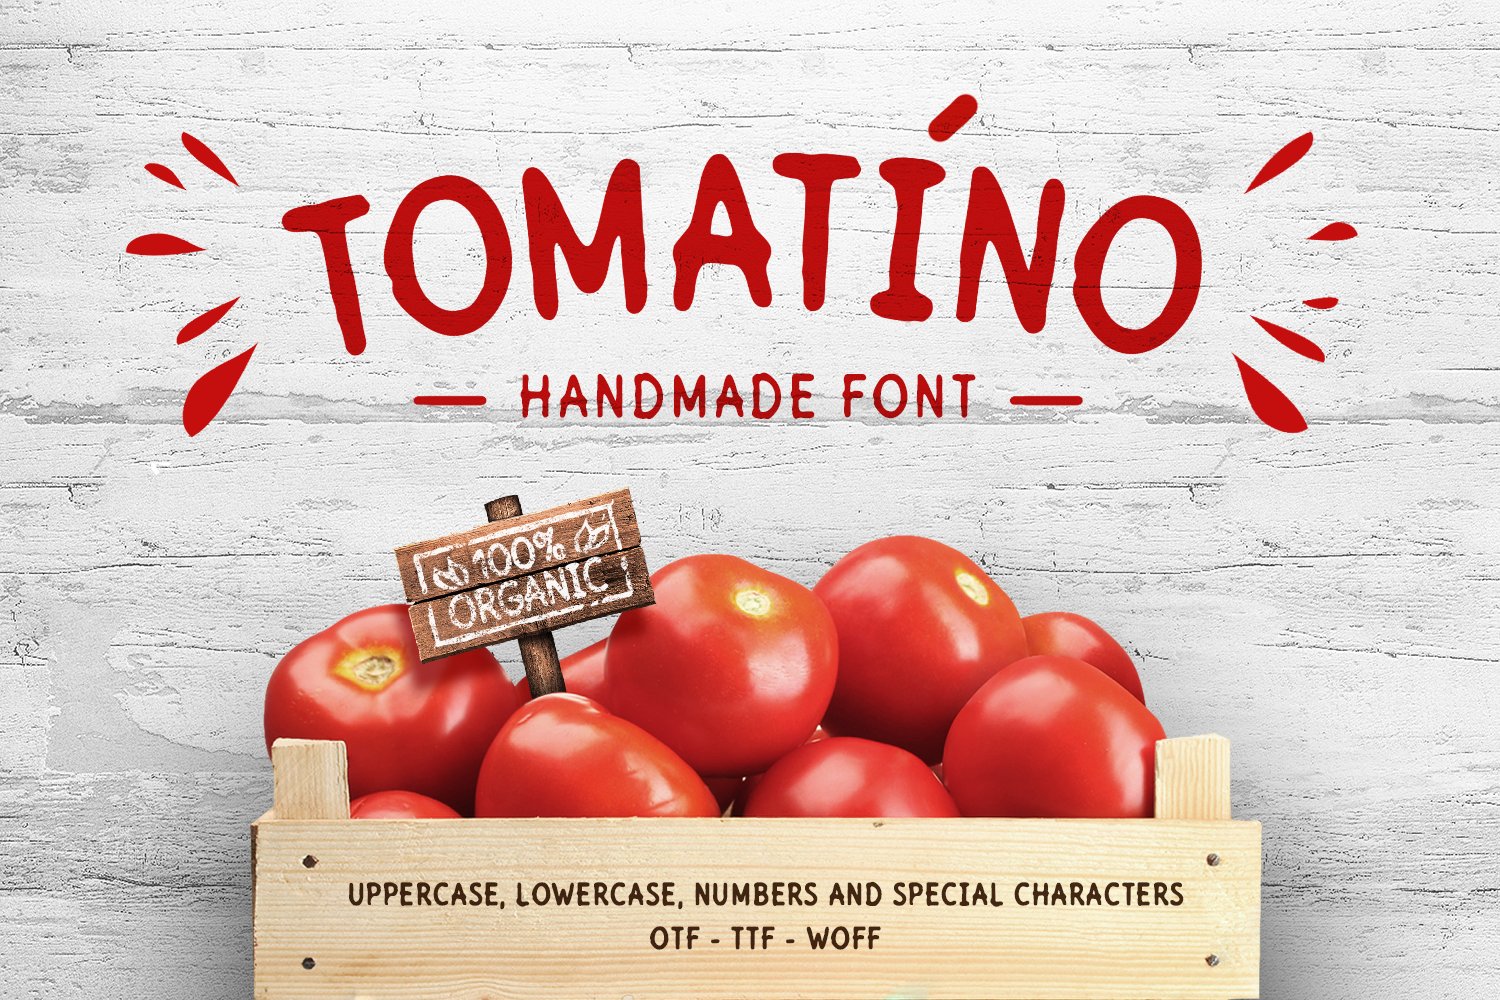 Tomatino. Handmade Sans Serif Font cover image.